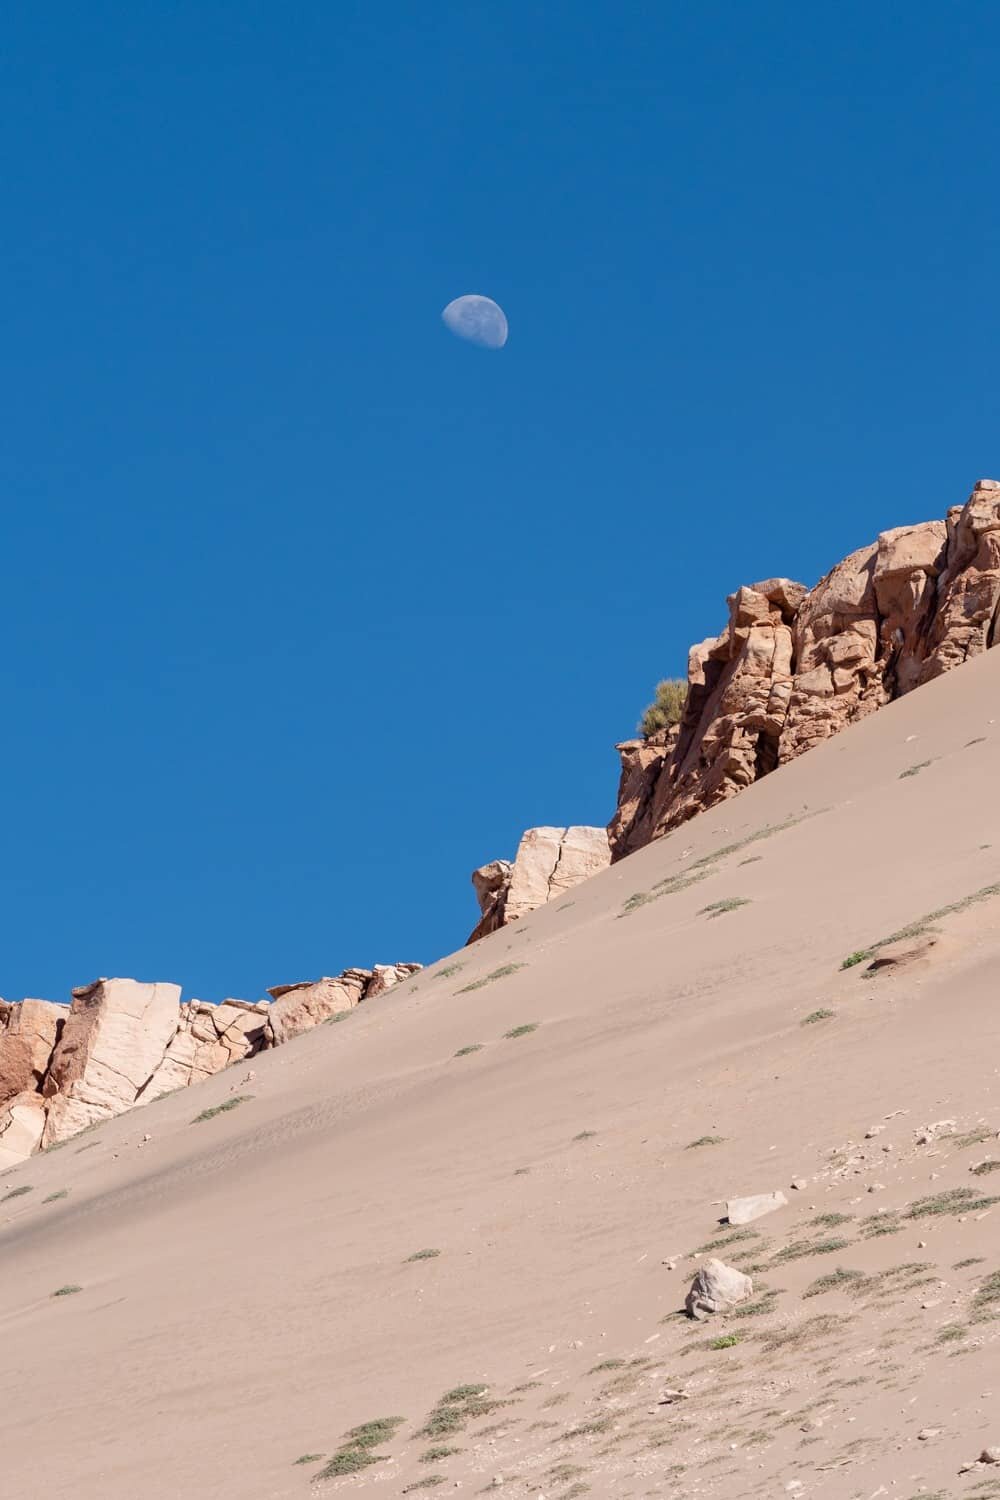 Kari Gorge, Atacama Desert, Chile-6-2